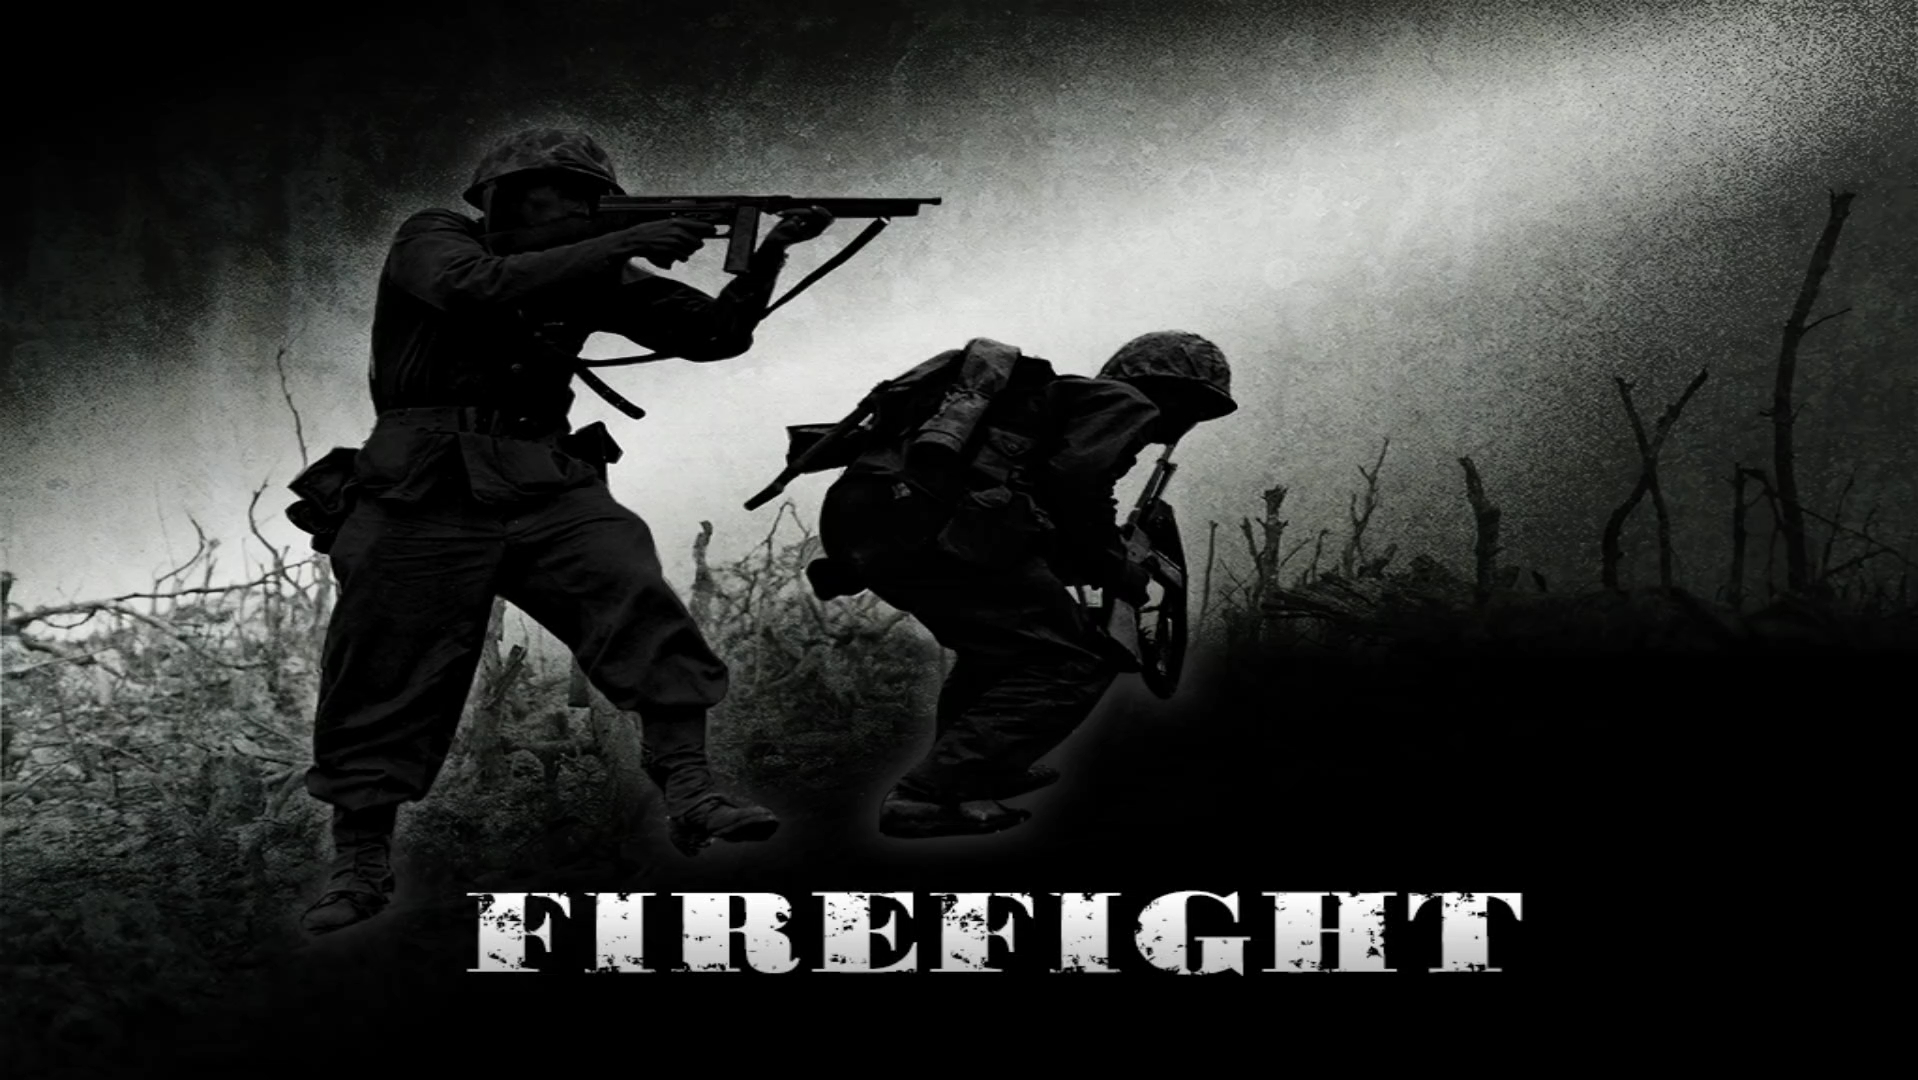 [firefight交战]8.3.0版本更新内容(粗略)